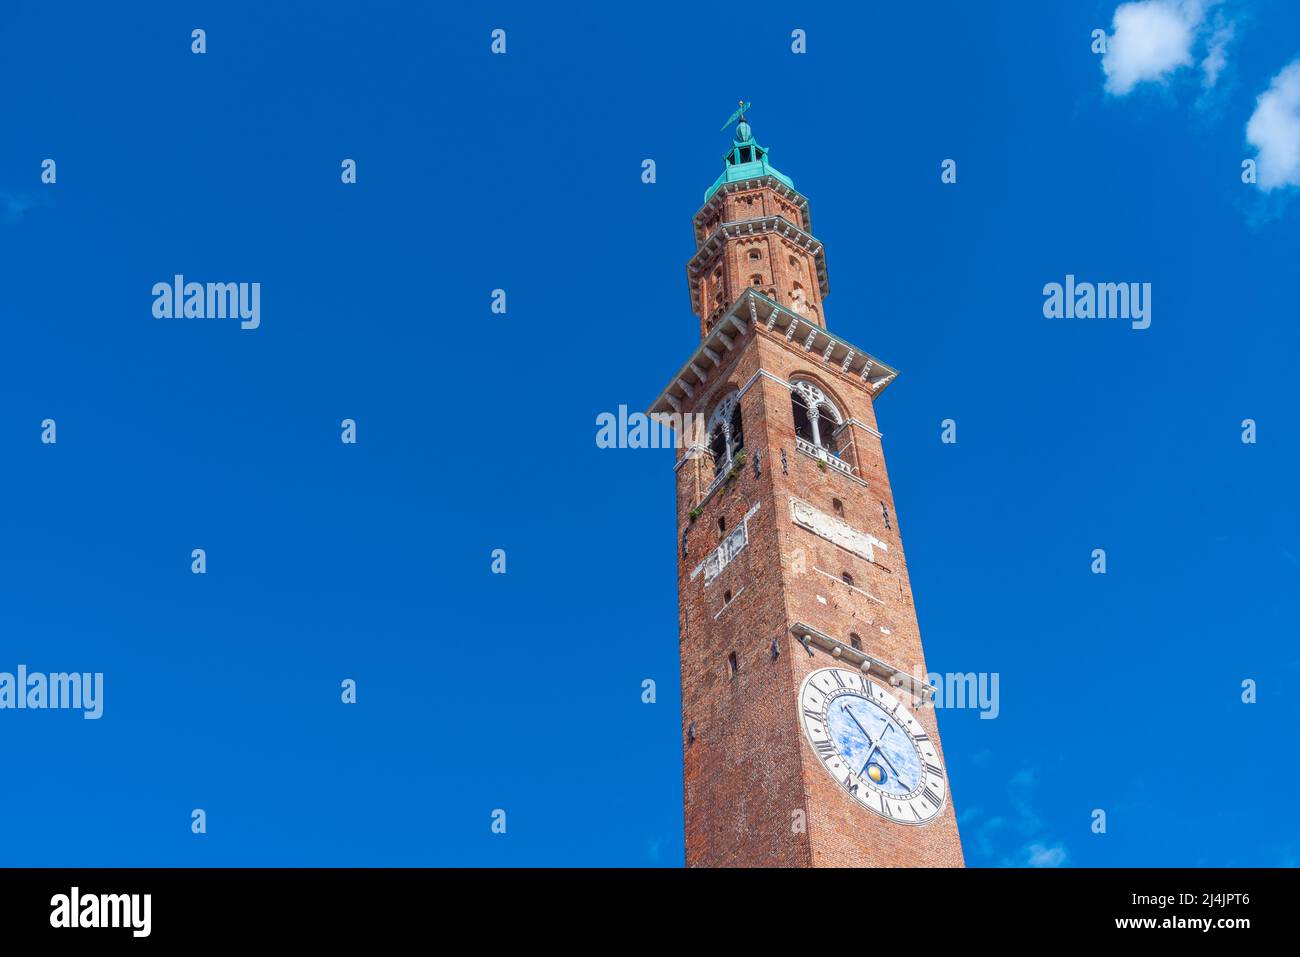 Clock tower of the Basilica Palladiana at the Piazza dei Signori square in the Italian town Vicenza. Stock Photo